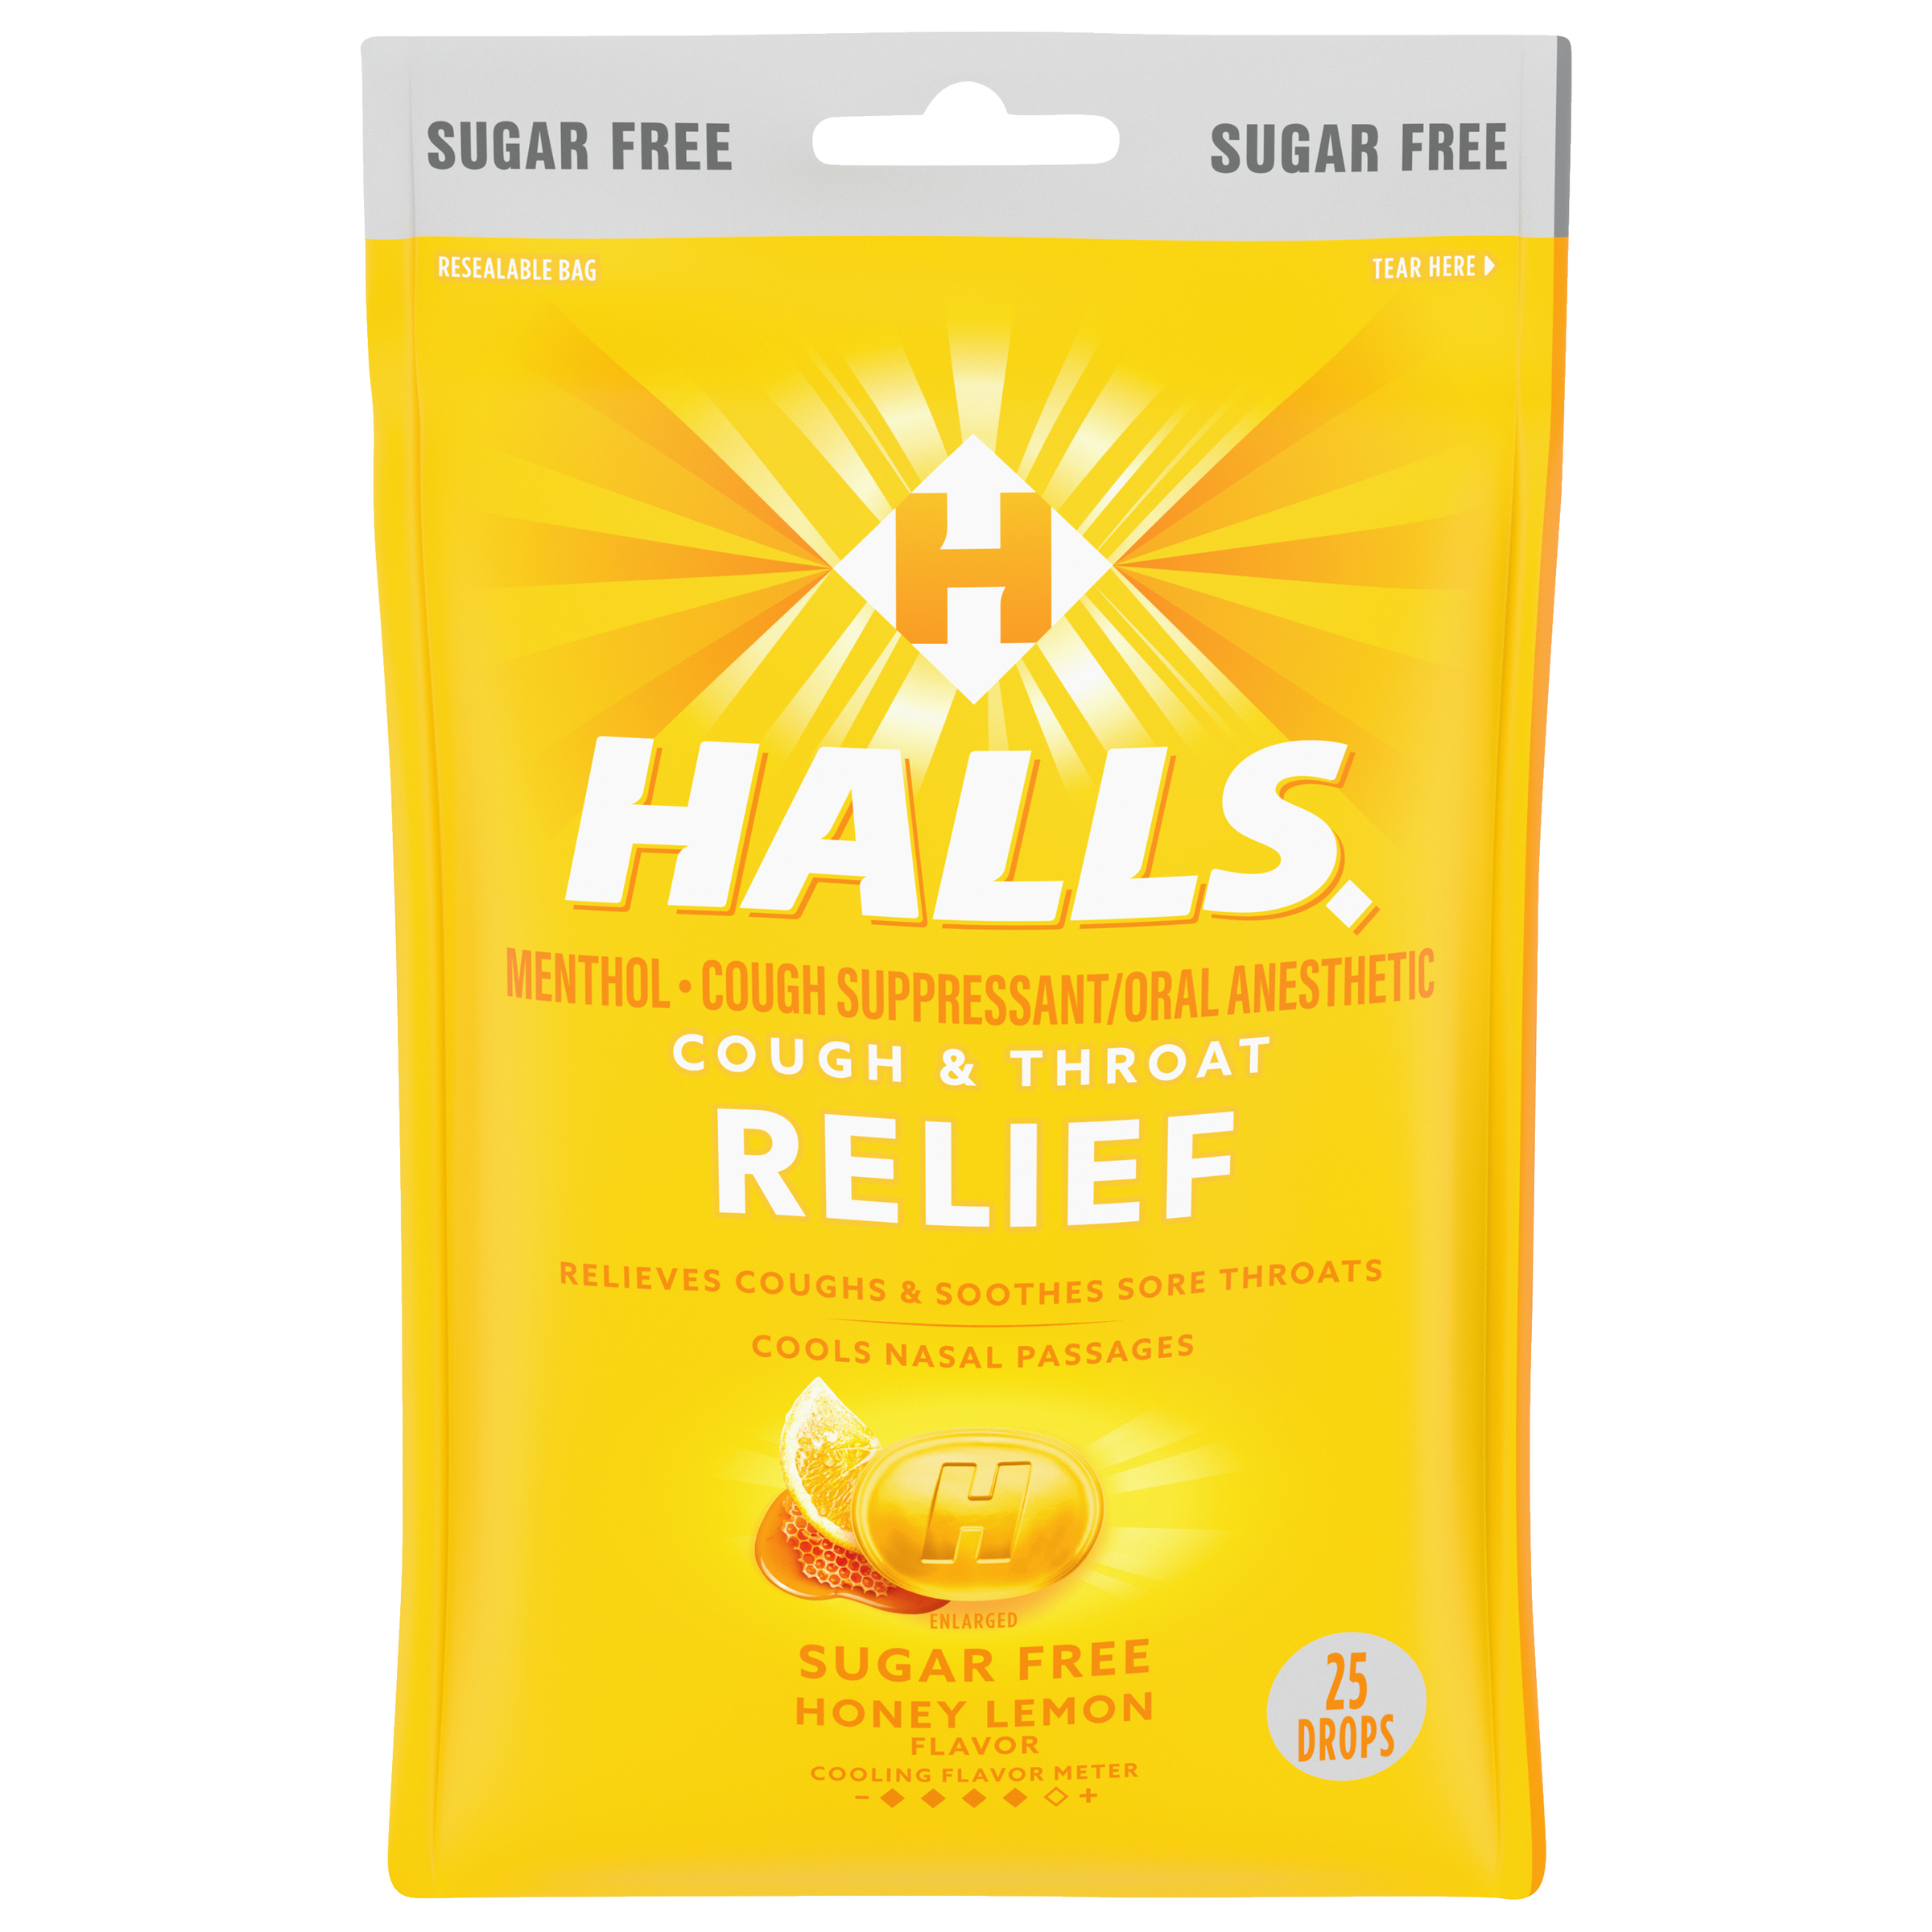 HALLS Sugar Free Honey Lemon Flavor Cough Drops